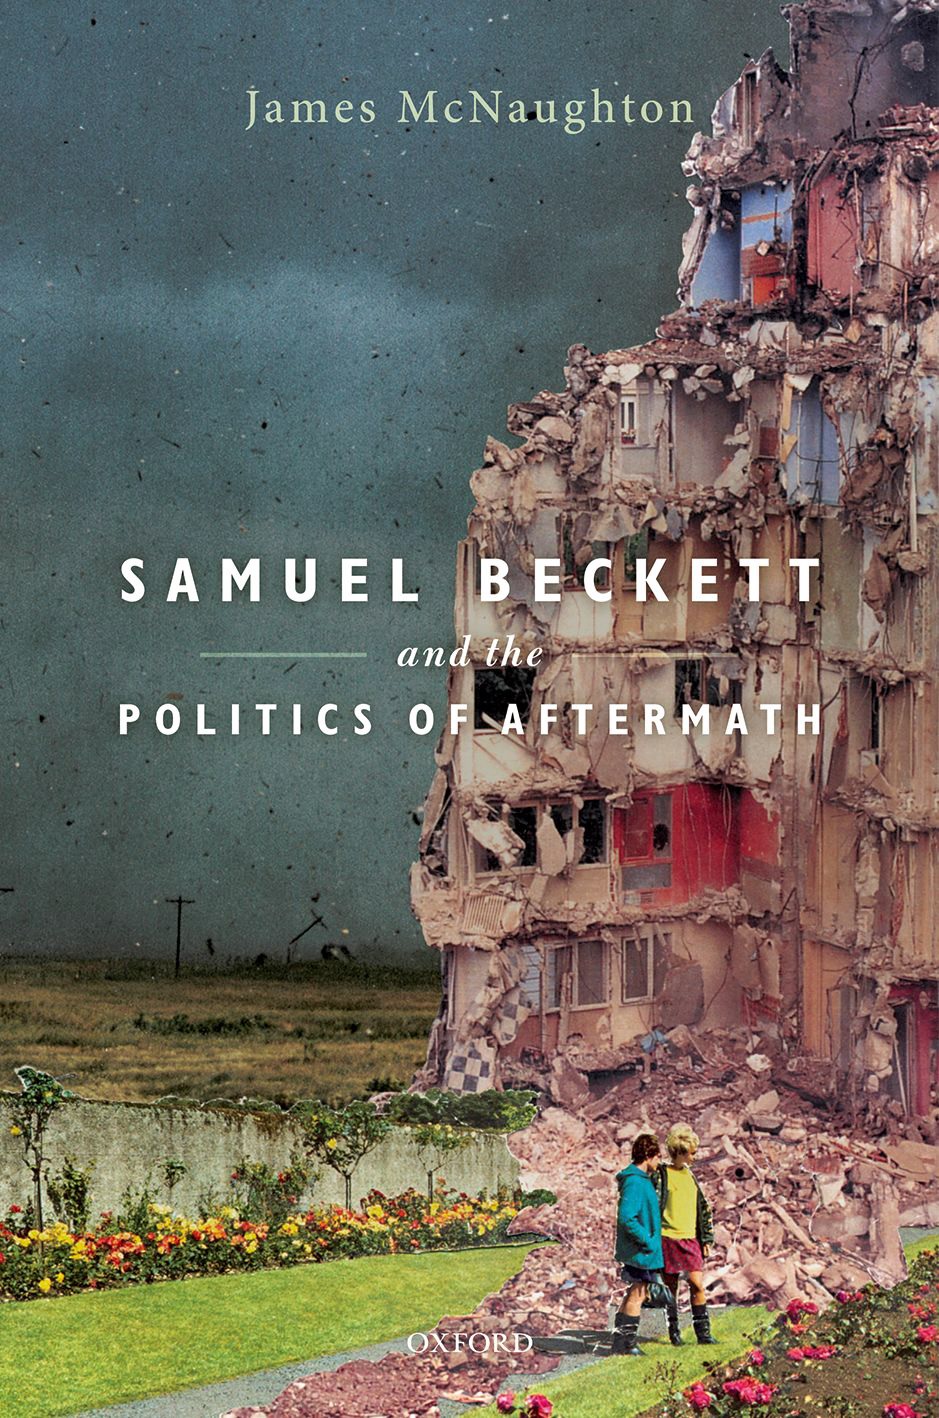 James-mcnaughton-samuel-beckett-and-the-politics-of-aftermath-theoryleaks.jpg